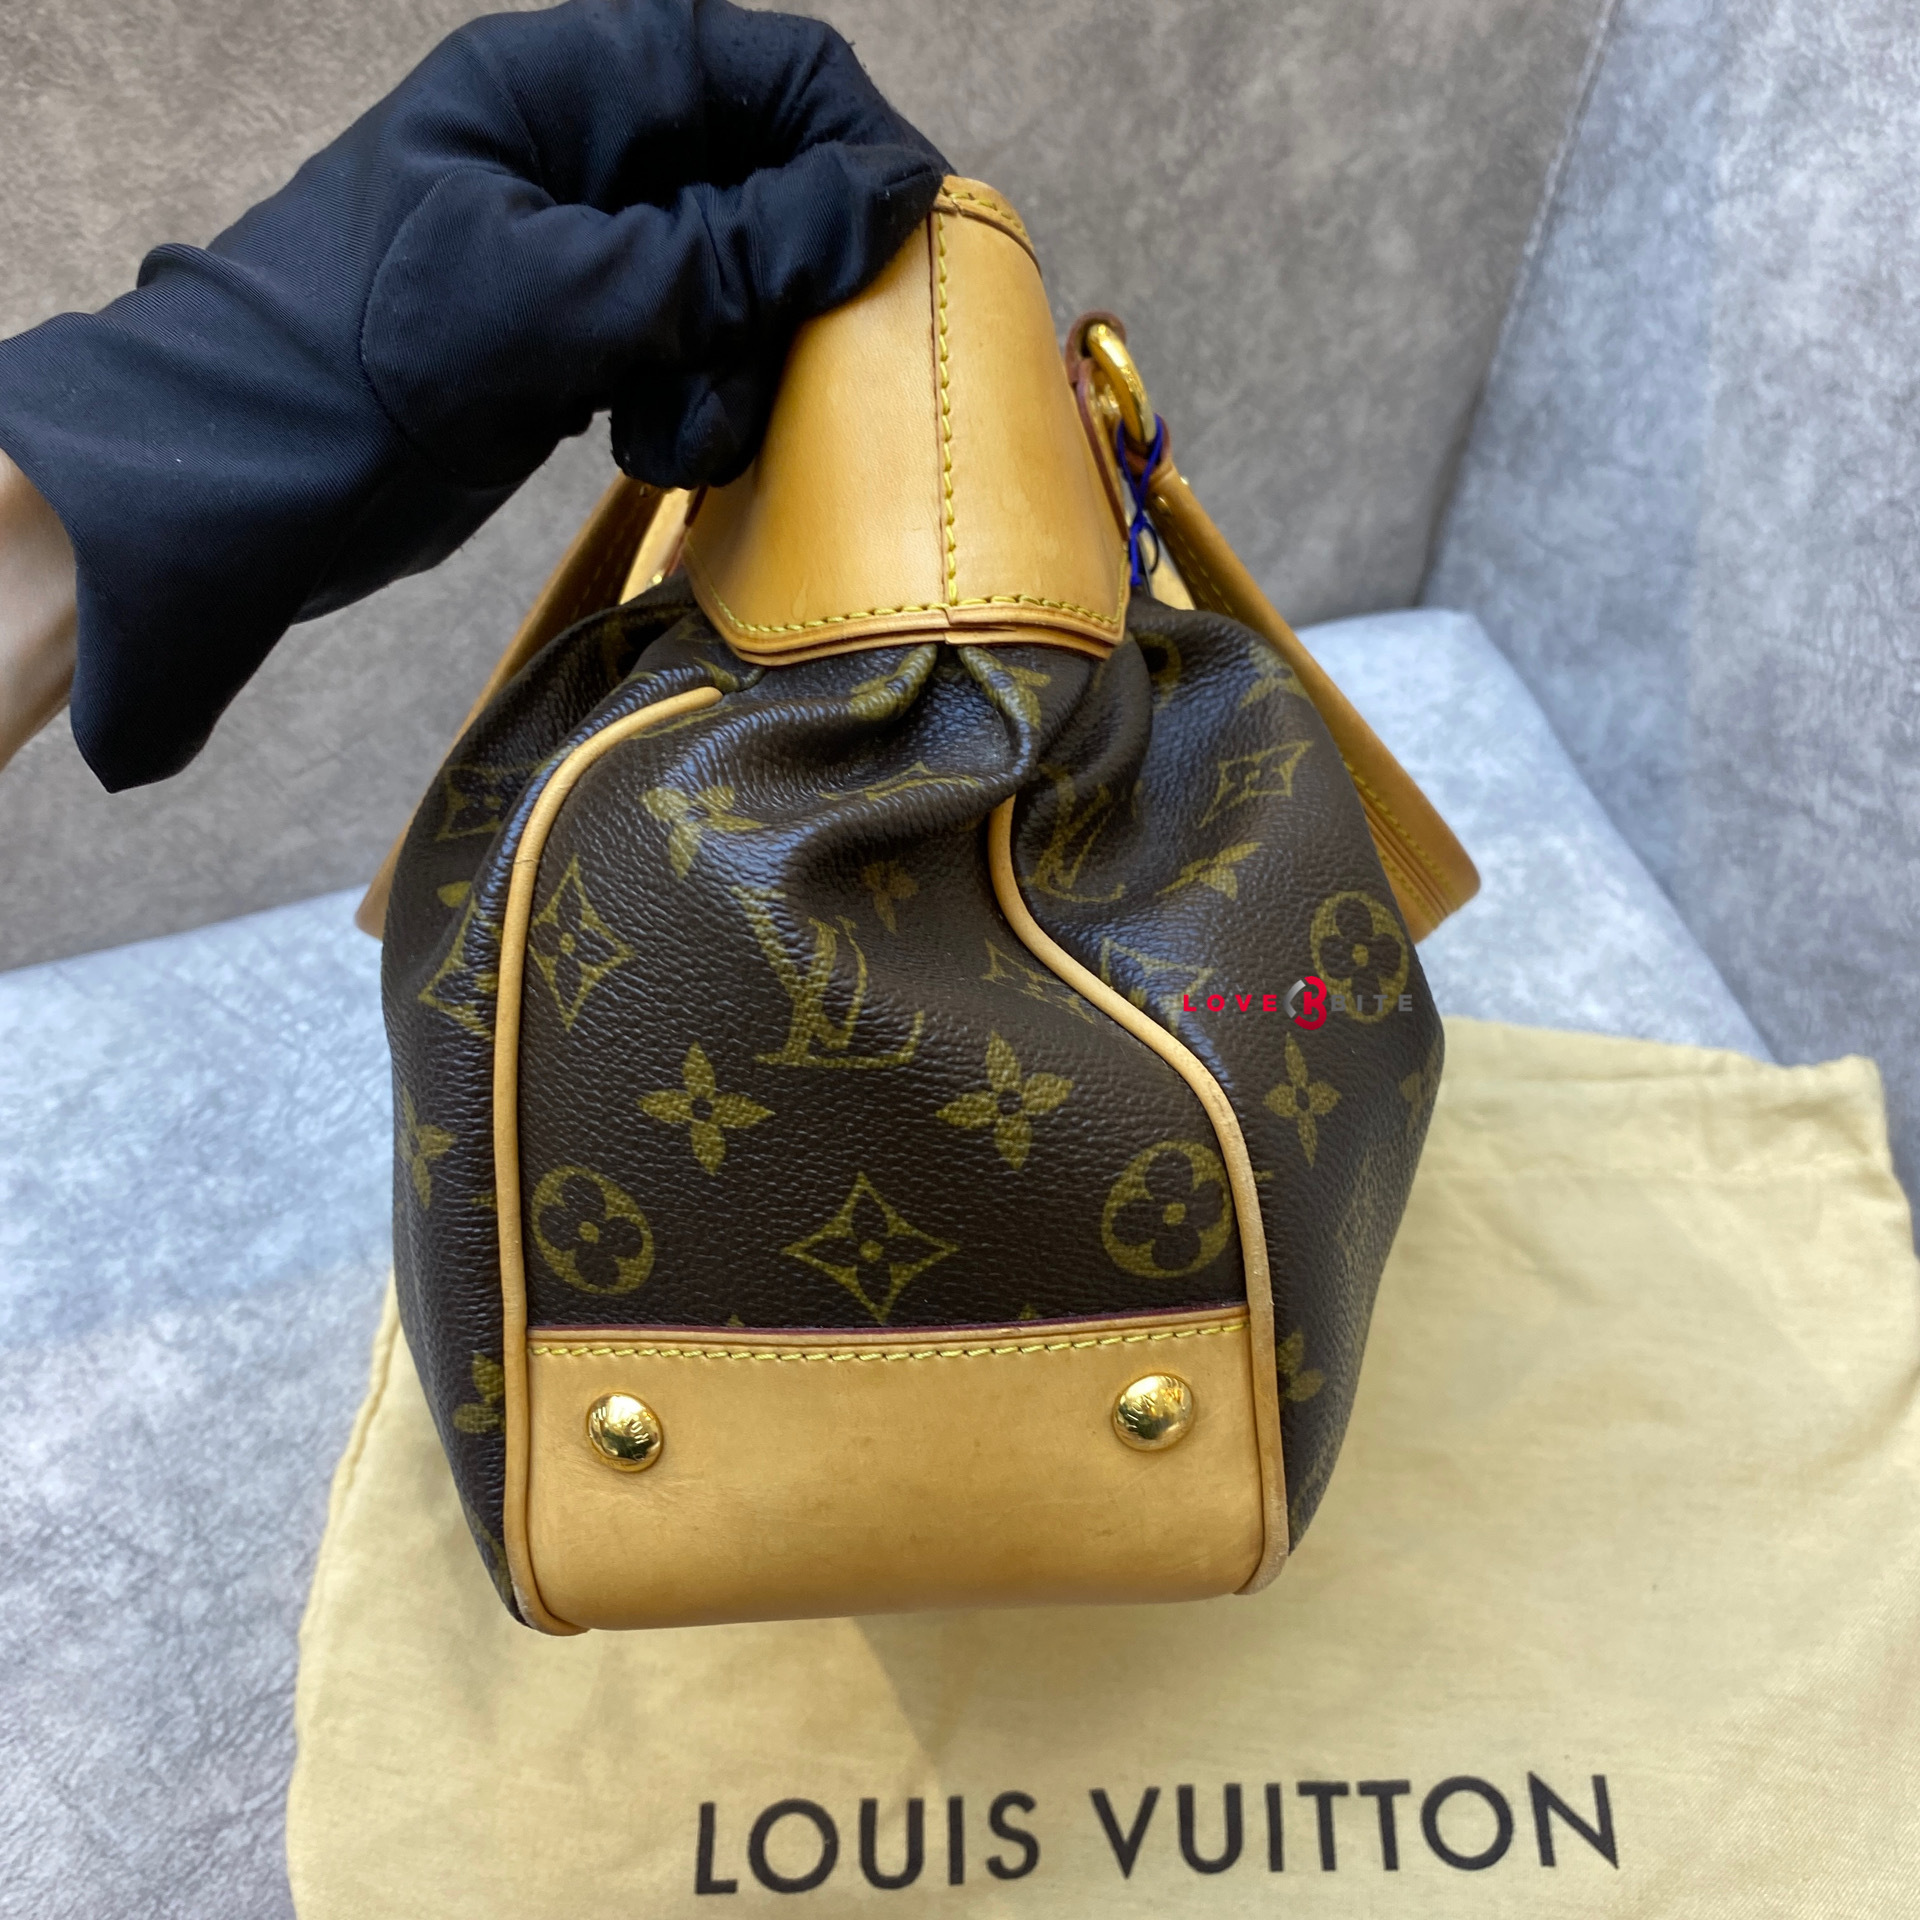 PRELOVED Louis Vuitton Boetie PM Handbag Review